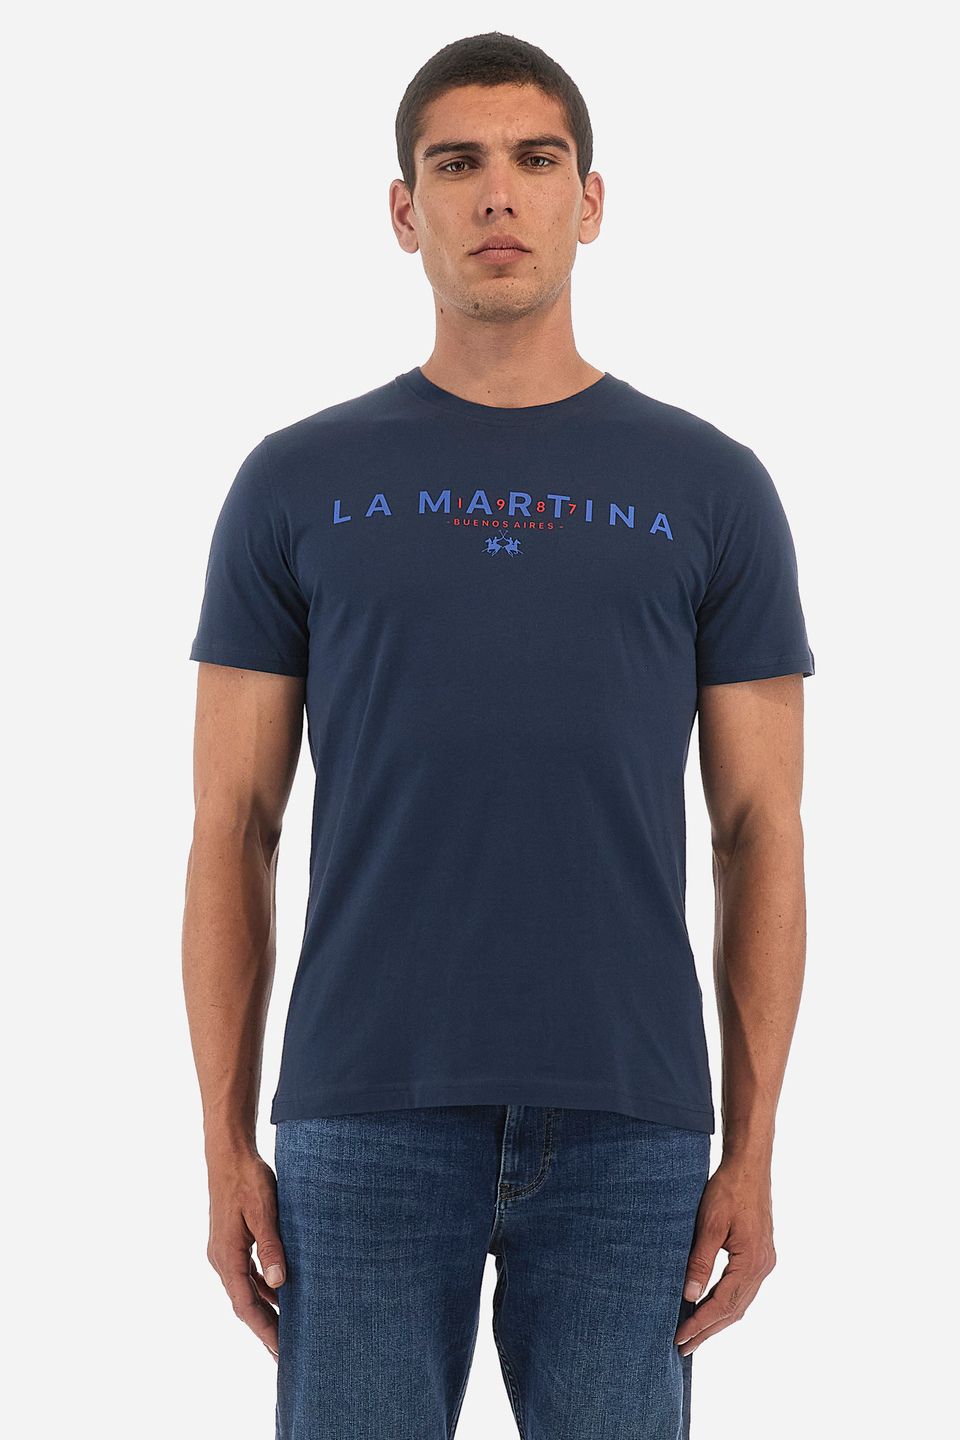 Men's T-shirts in a regular fit - Warley | La Martina - Official Online Shop